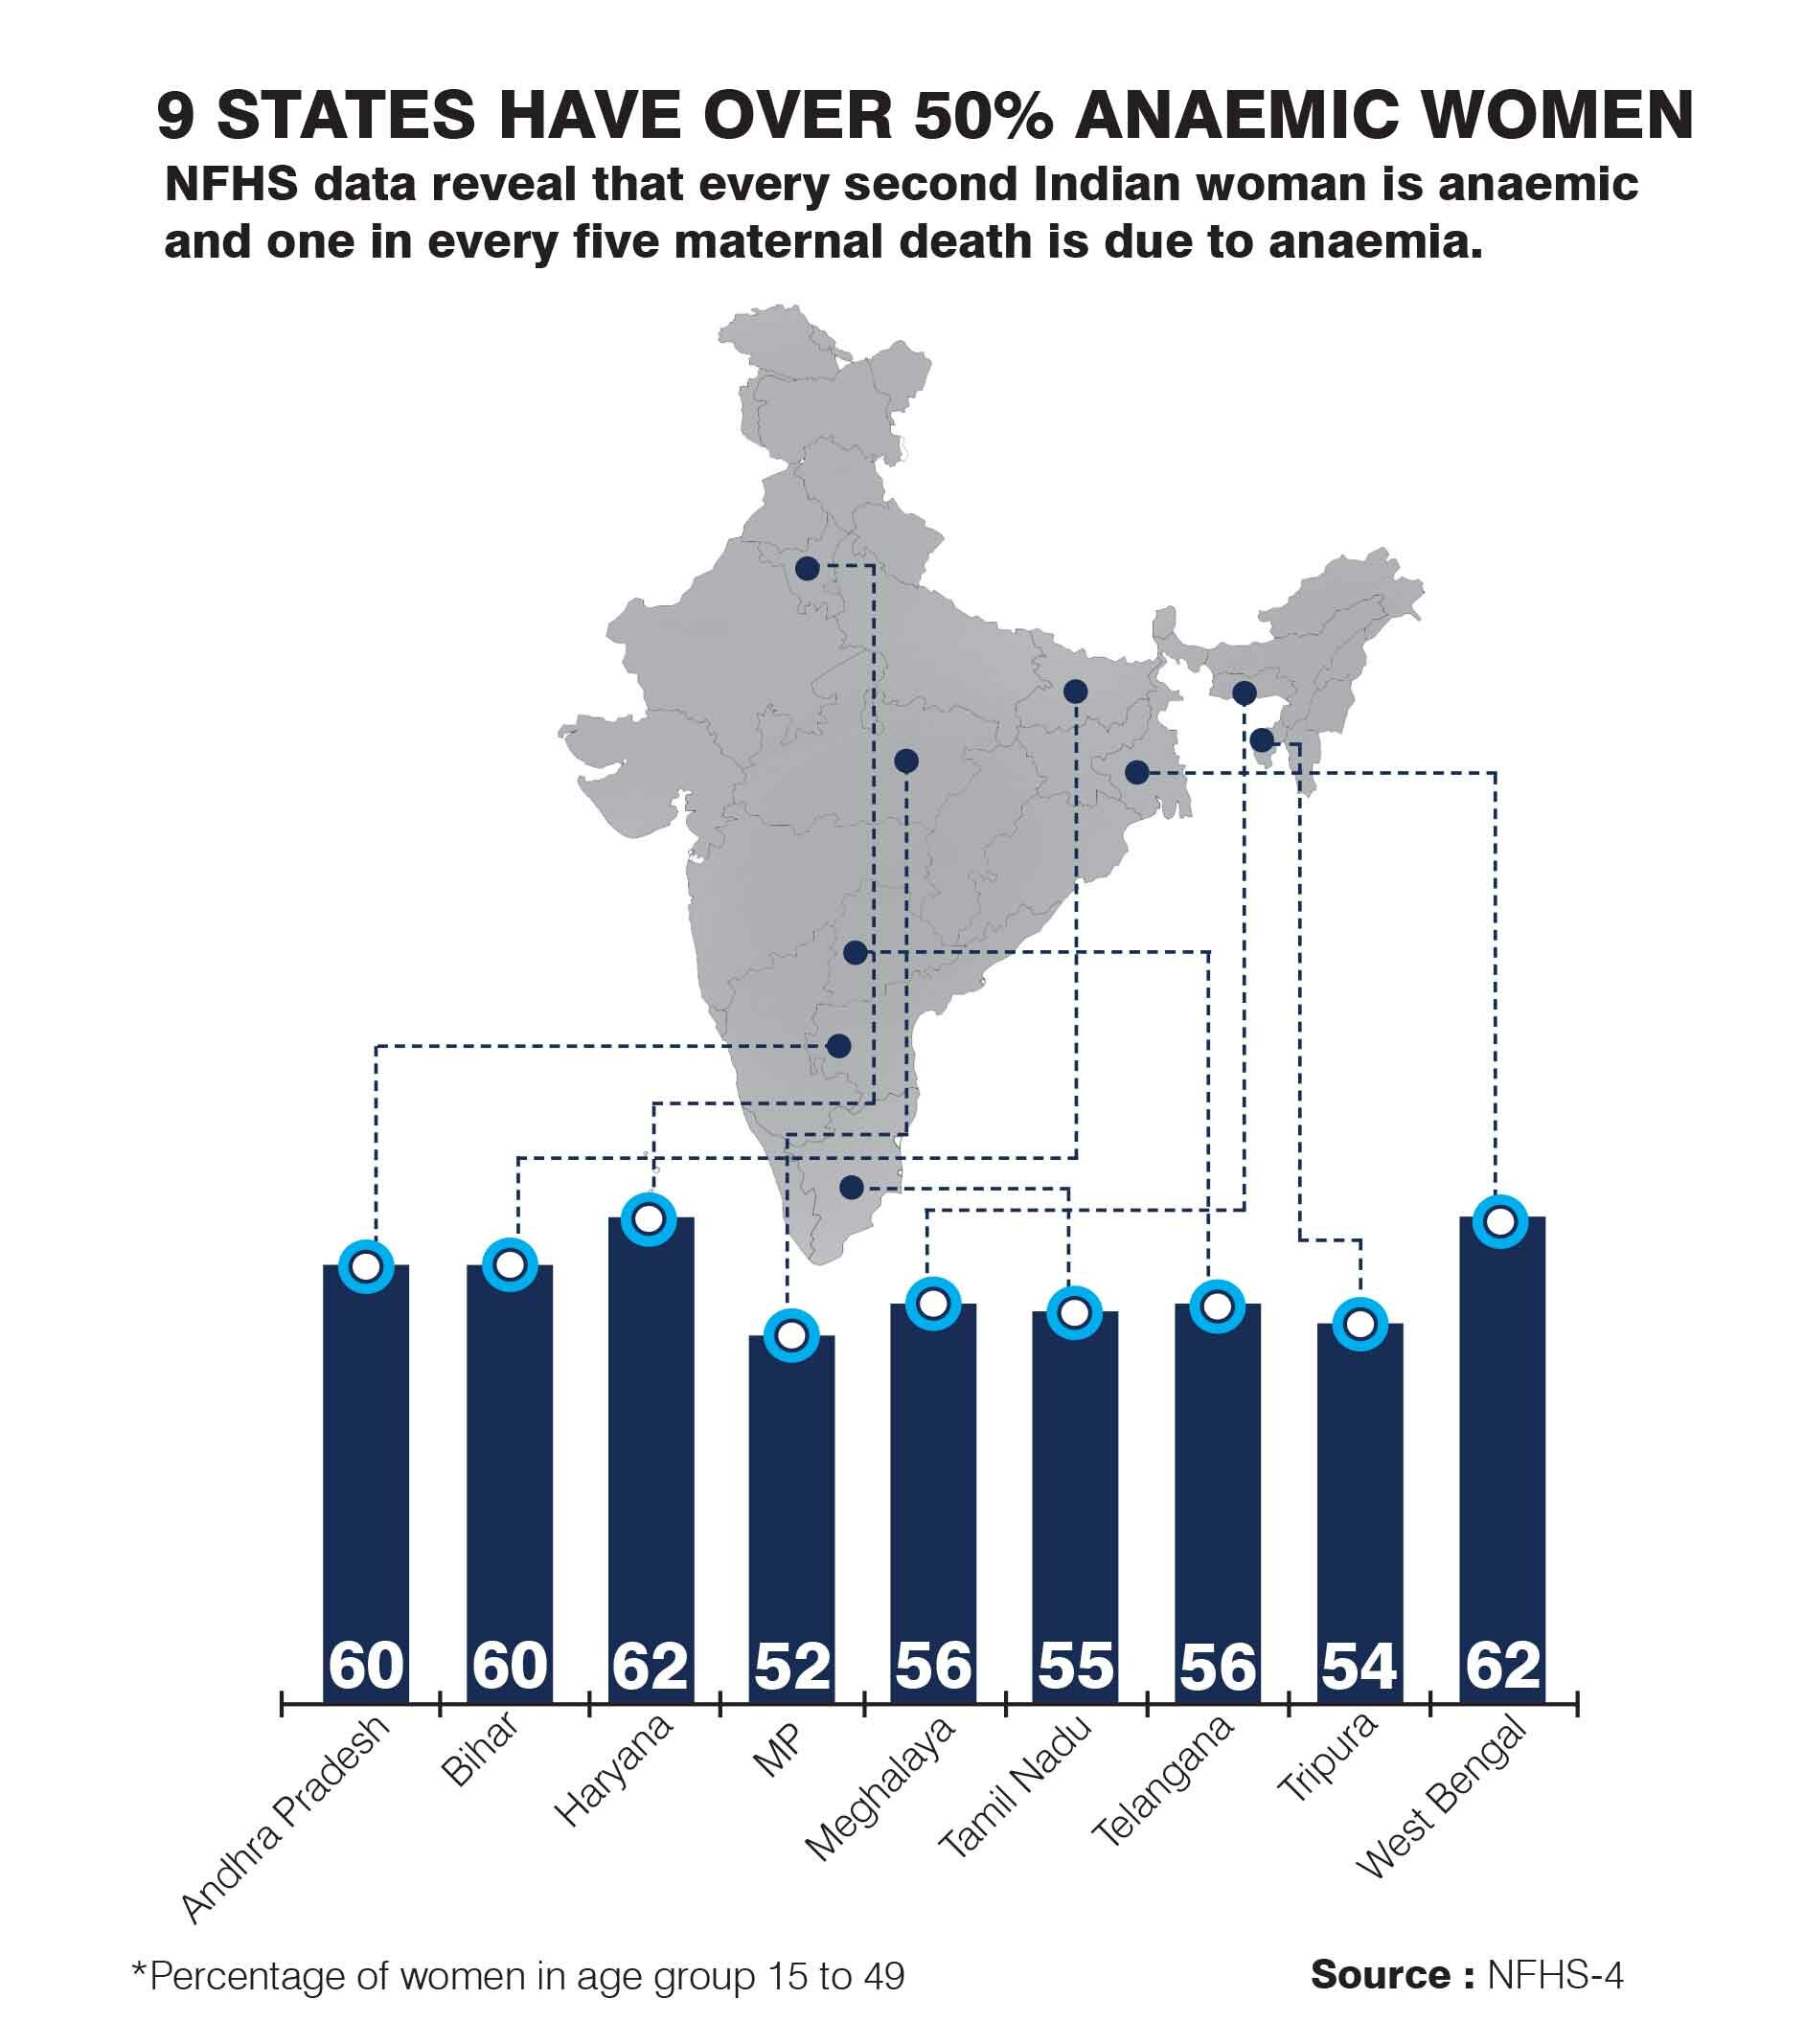 Burden of anaemia in India